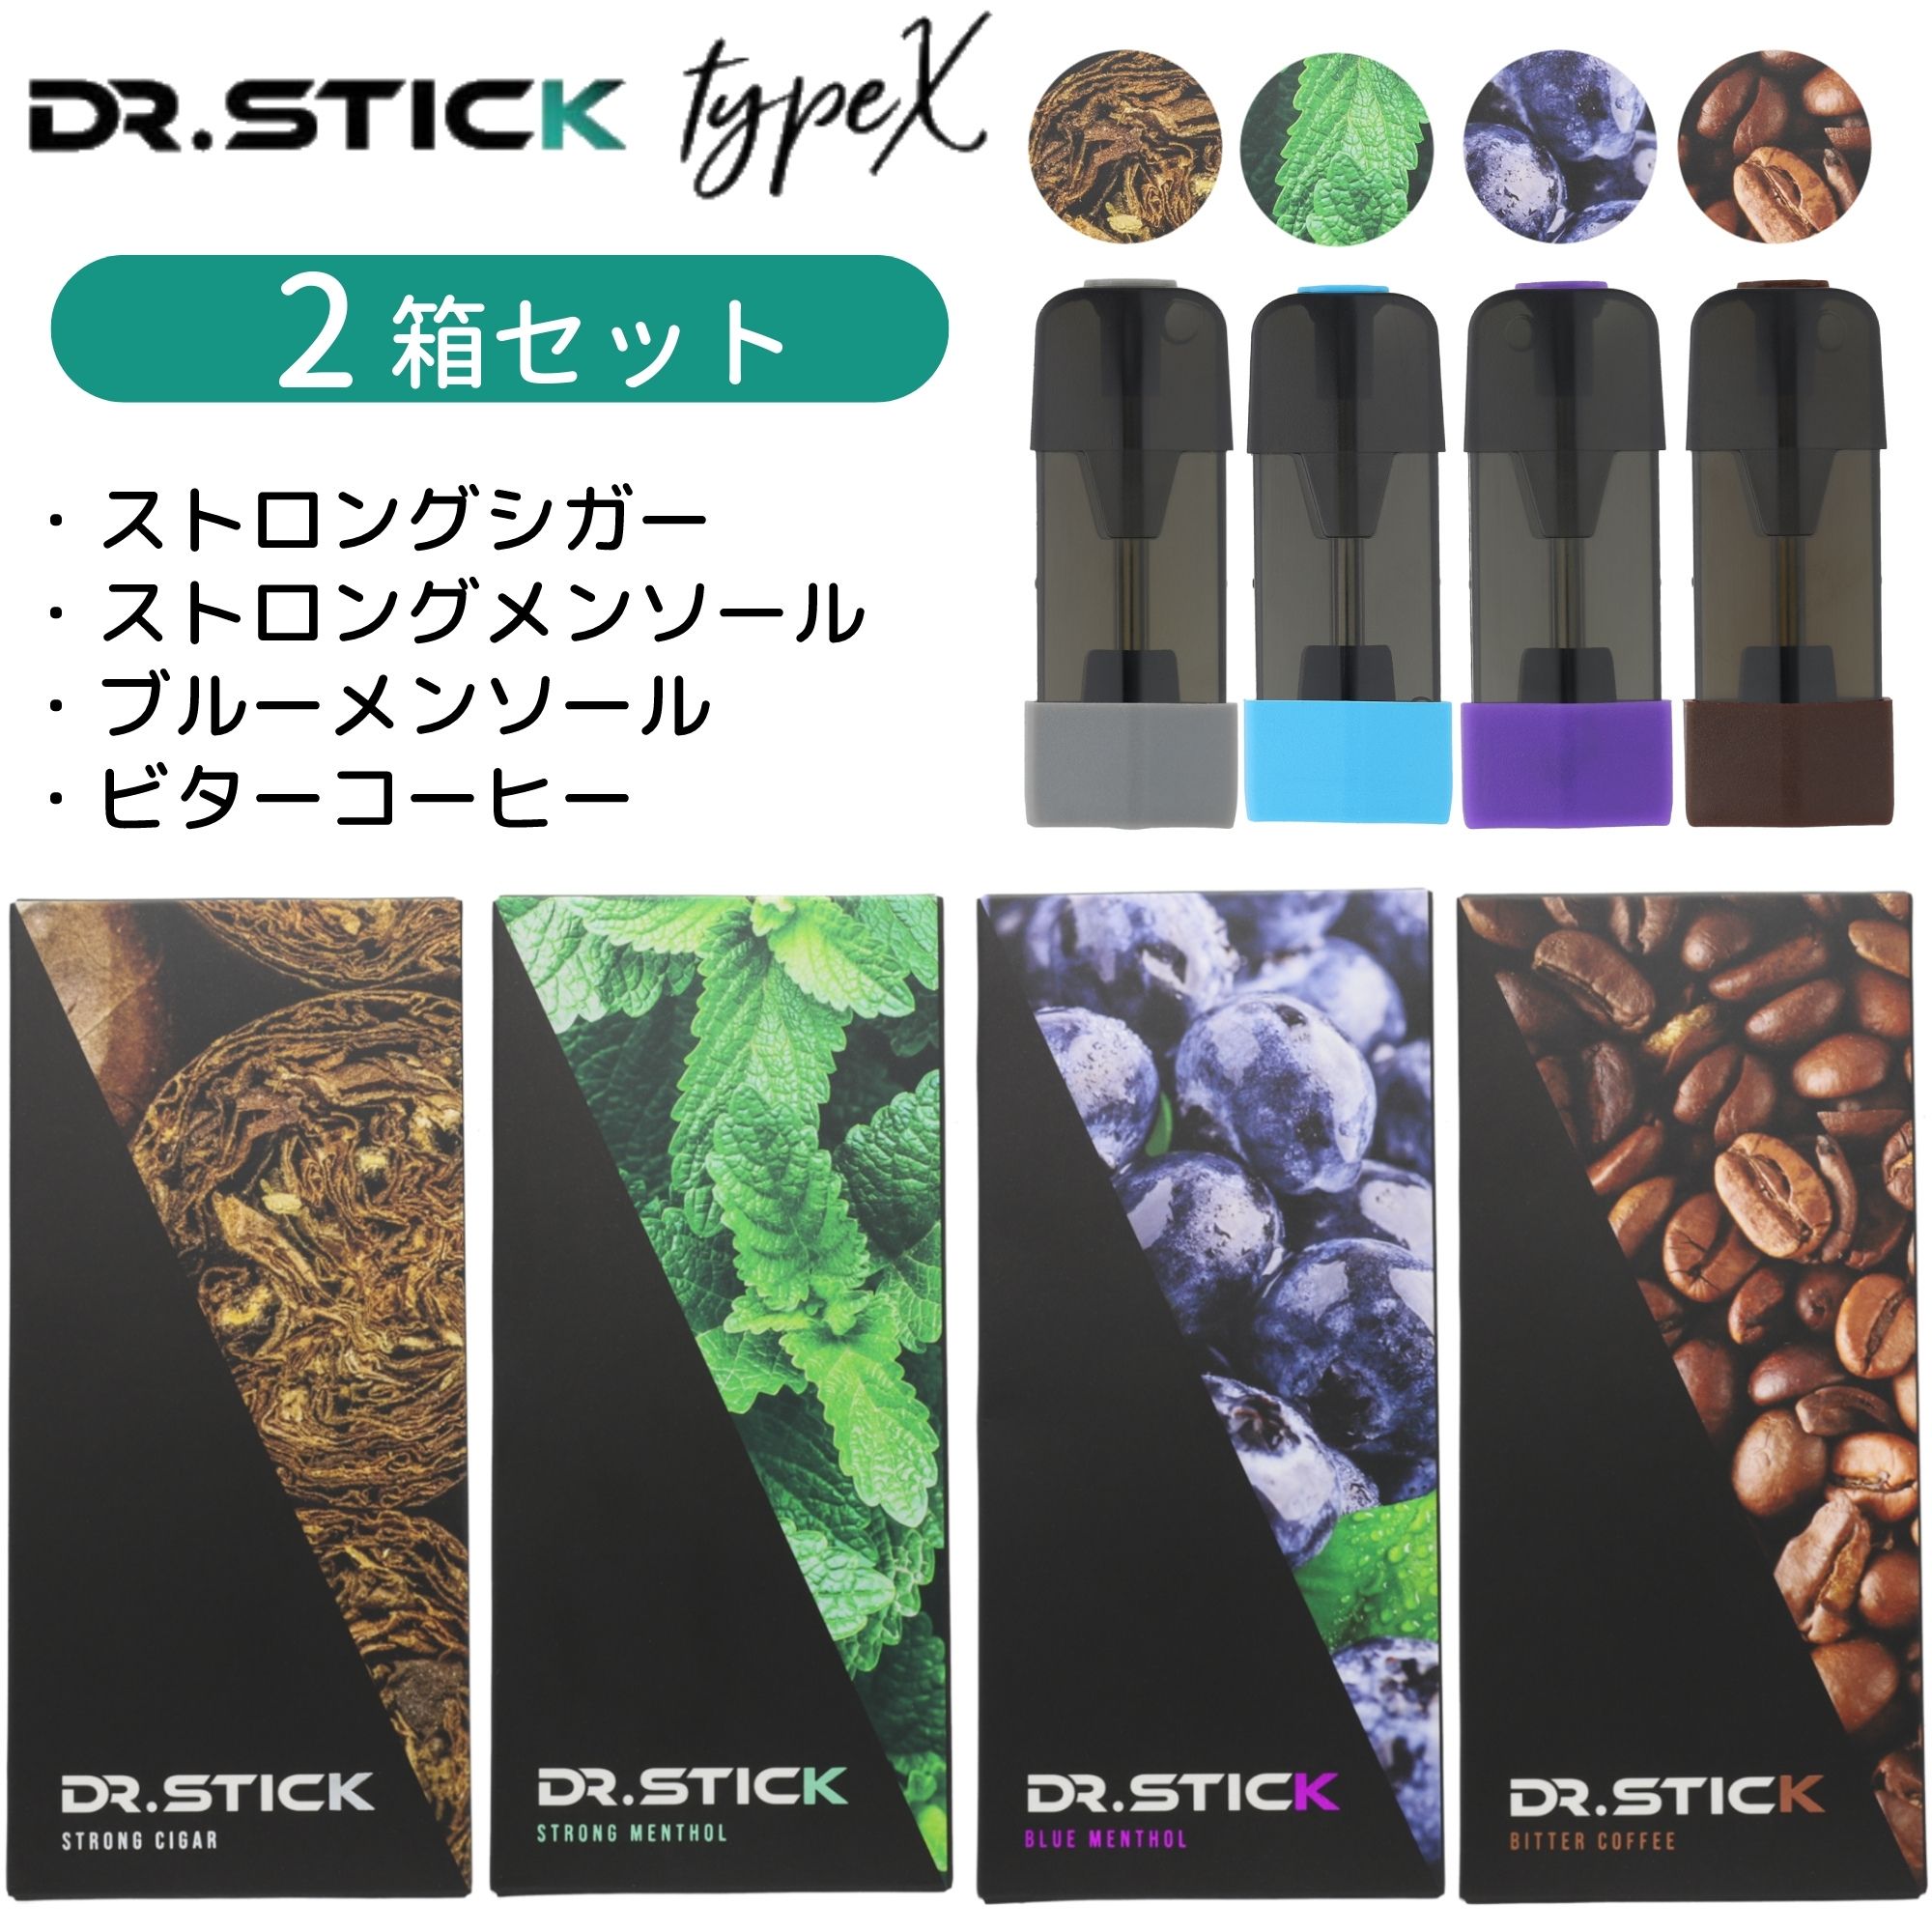 dr.stickの人気商品・通販・価格比較 - 価格.com